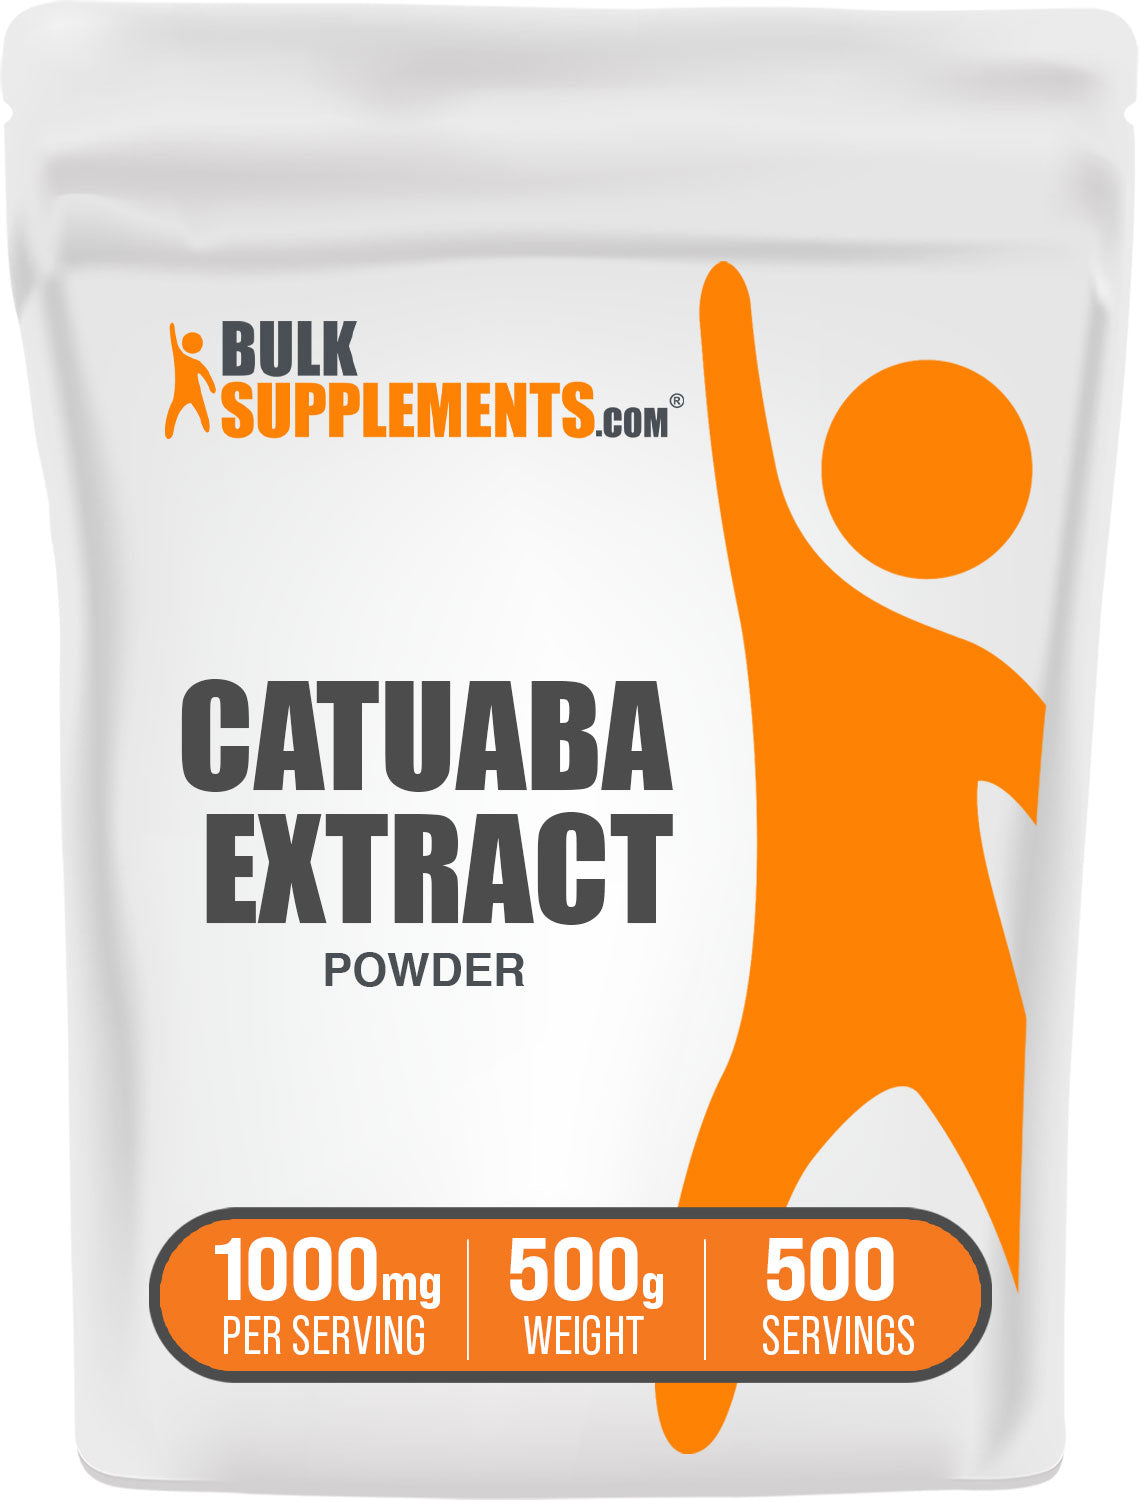 500g of Catuaba Extract